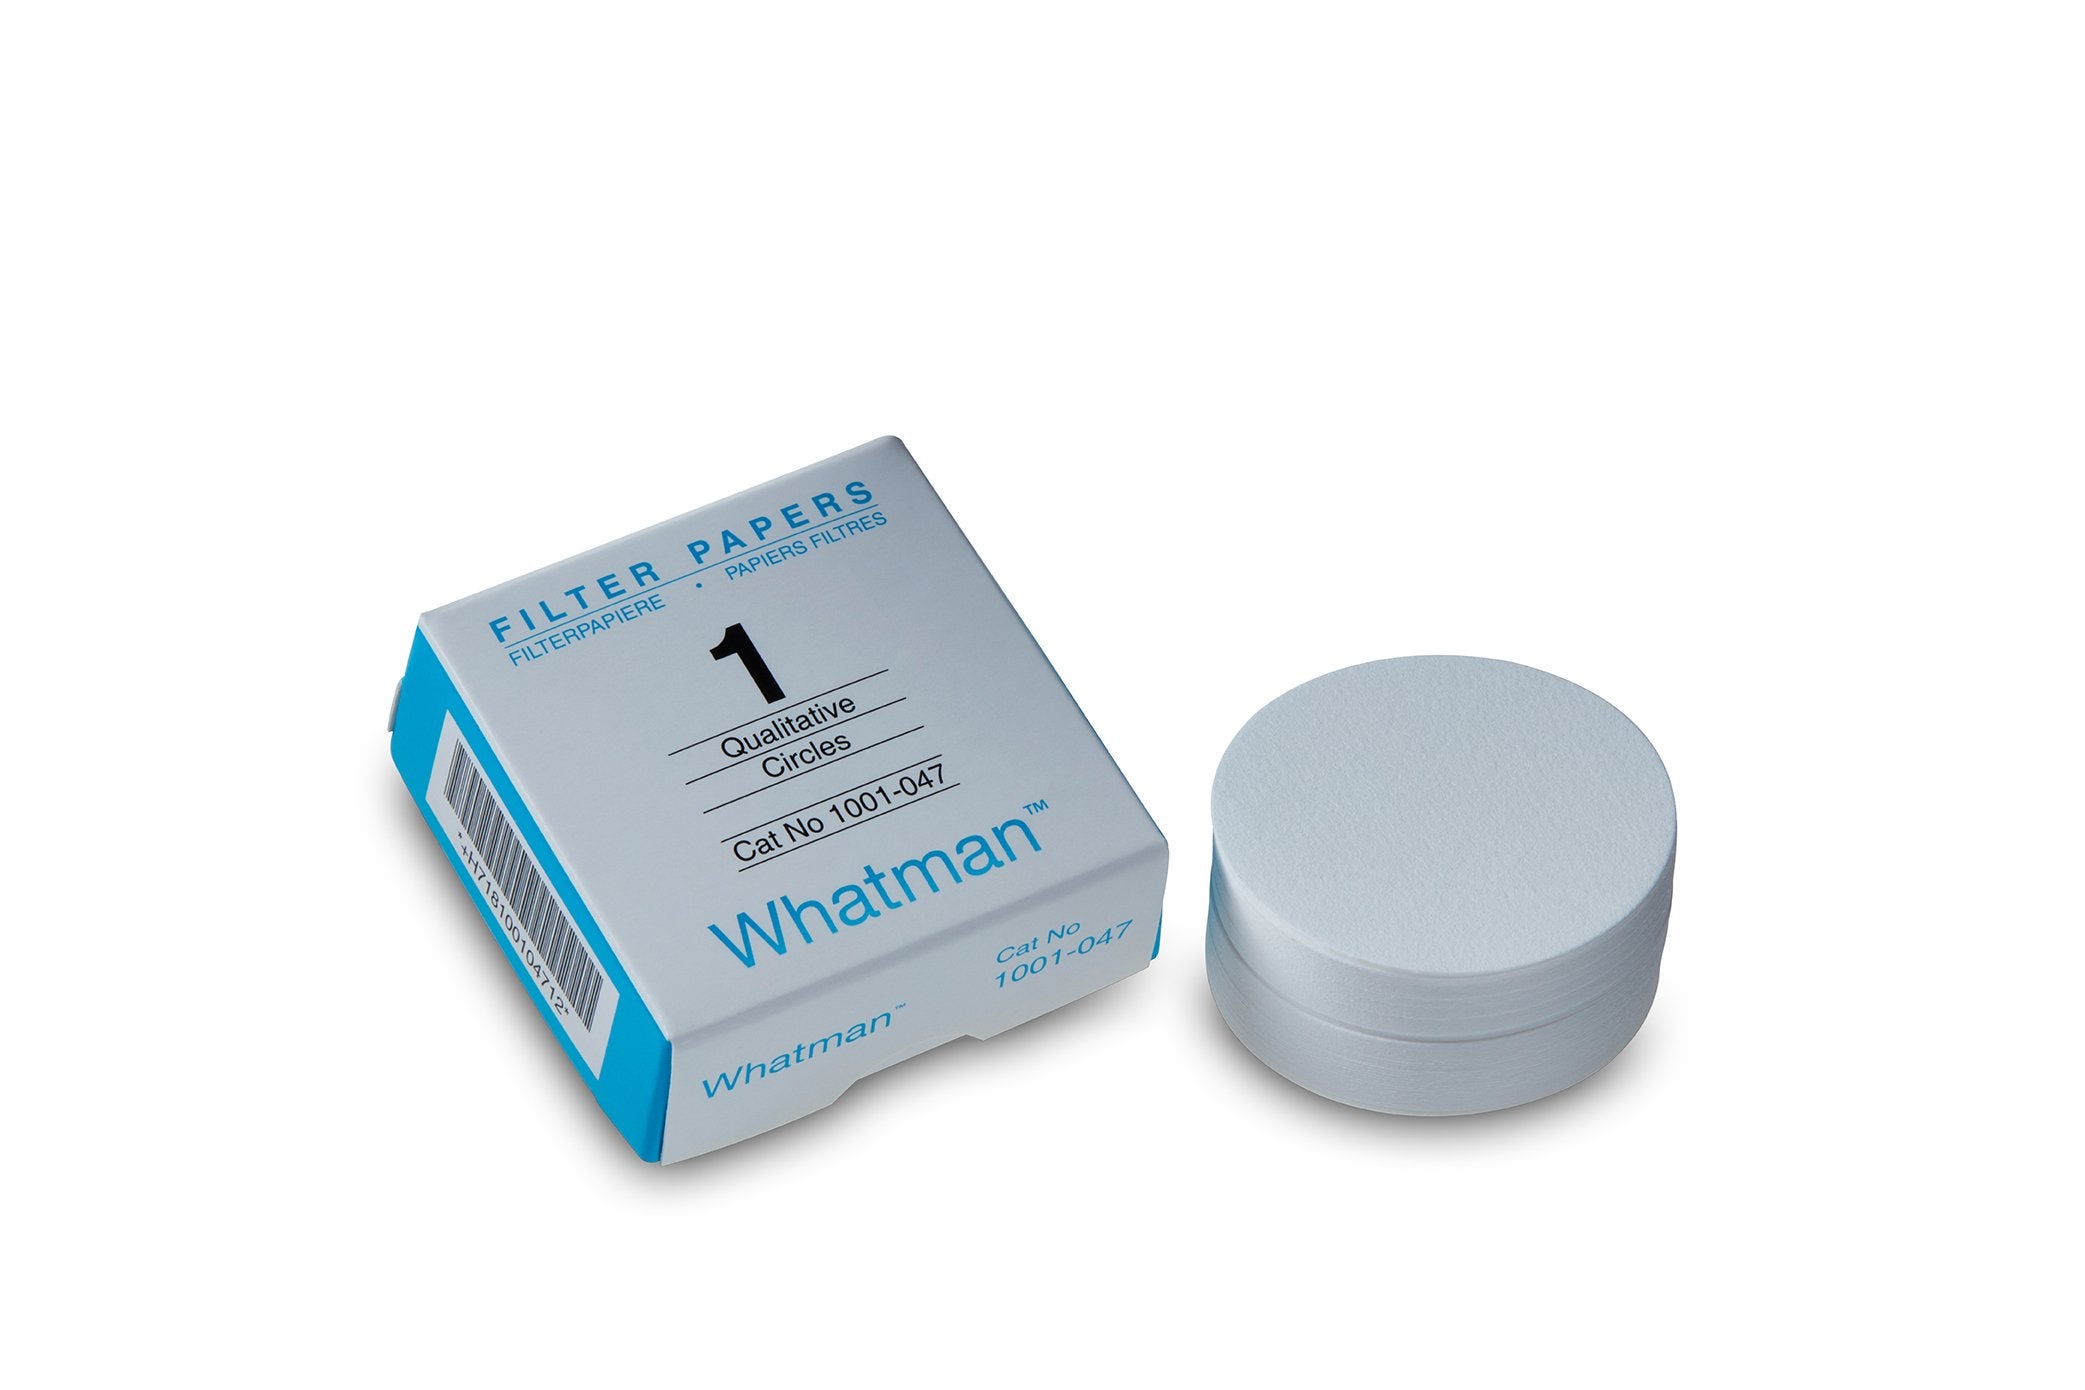 Whatman 3001-614 Cellulose Chromatography Paper, Grade 1 Chr Roll, 2.0cm x 100m, 1/pk